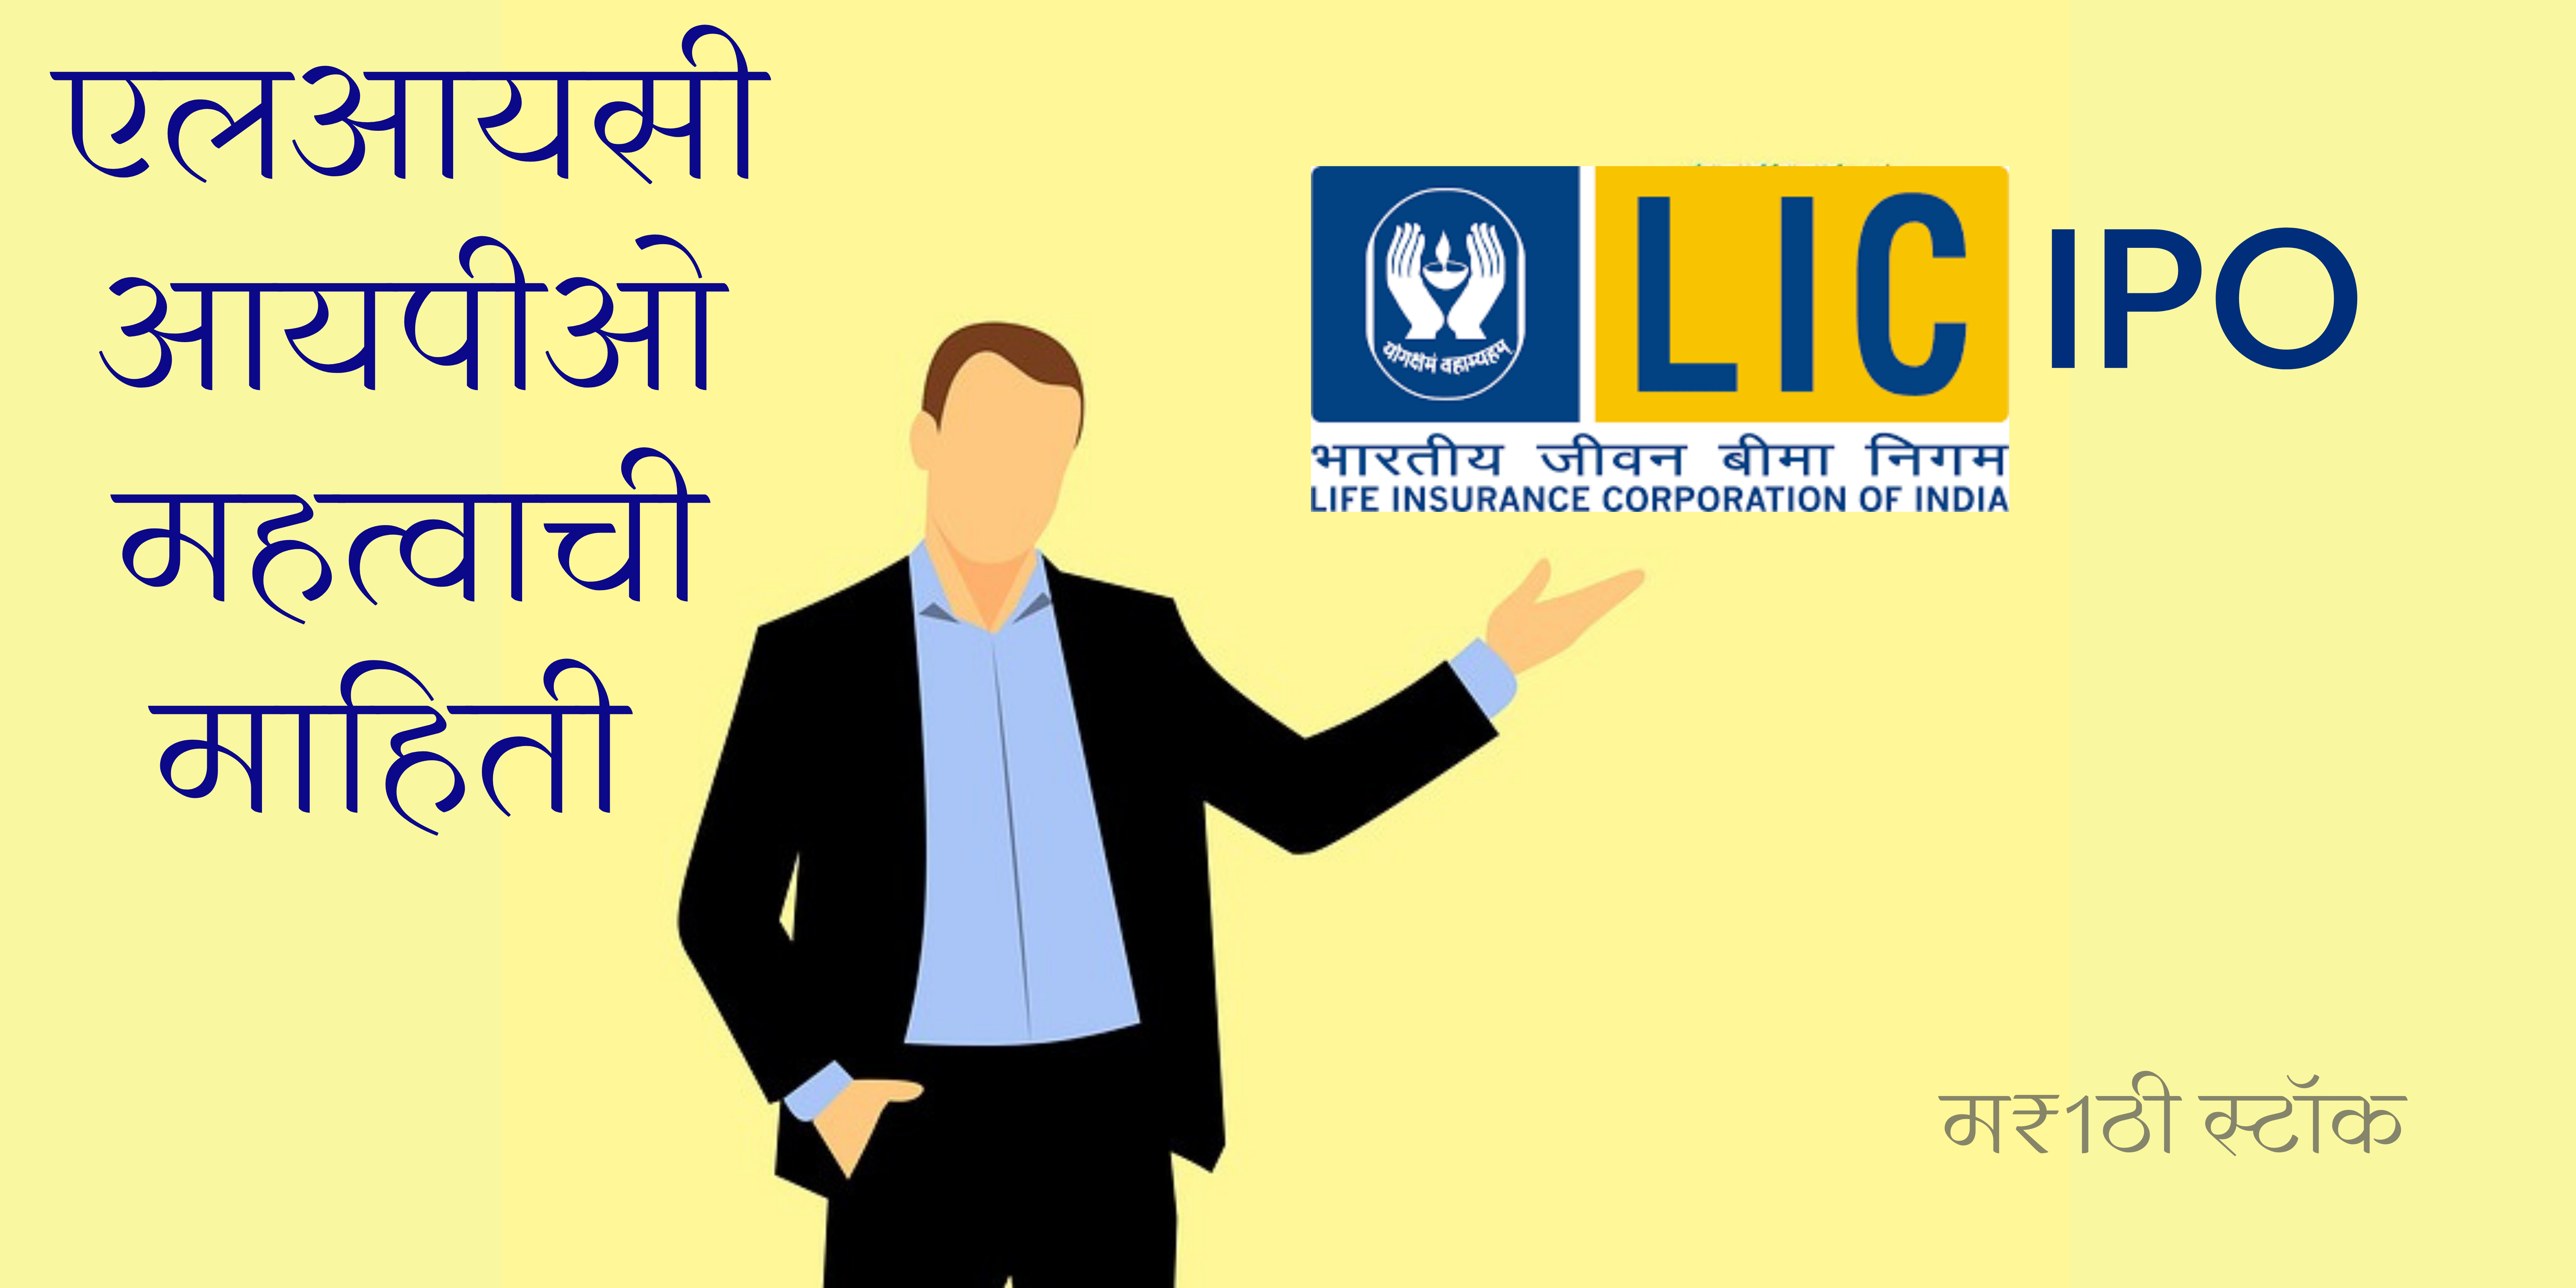 LIC IPO info in Marathi